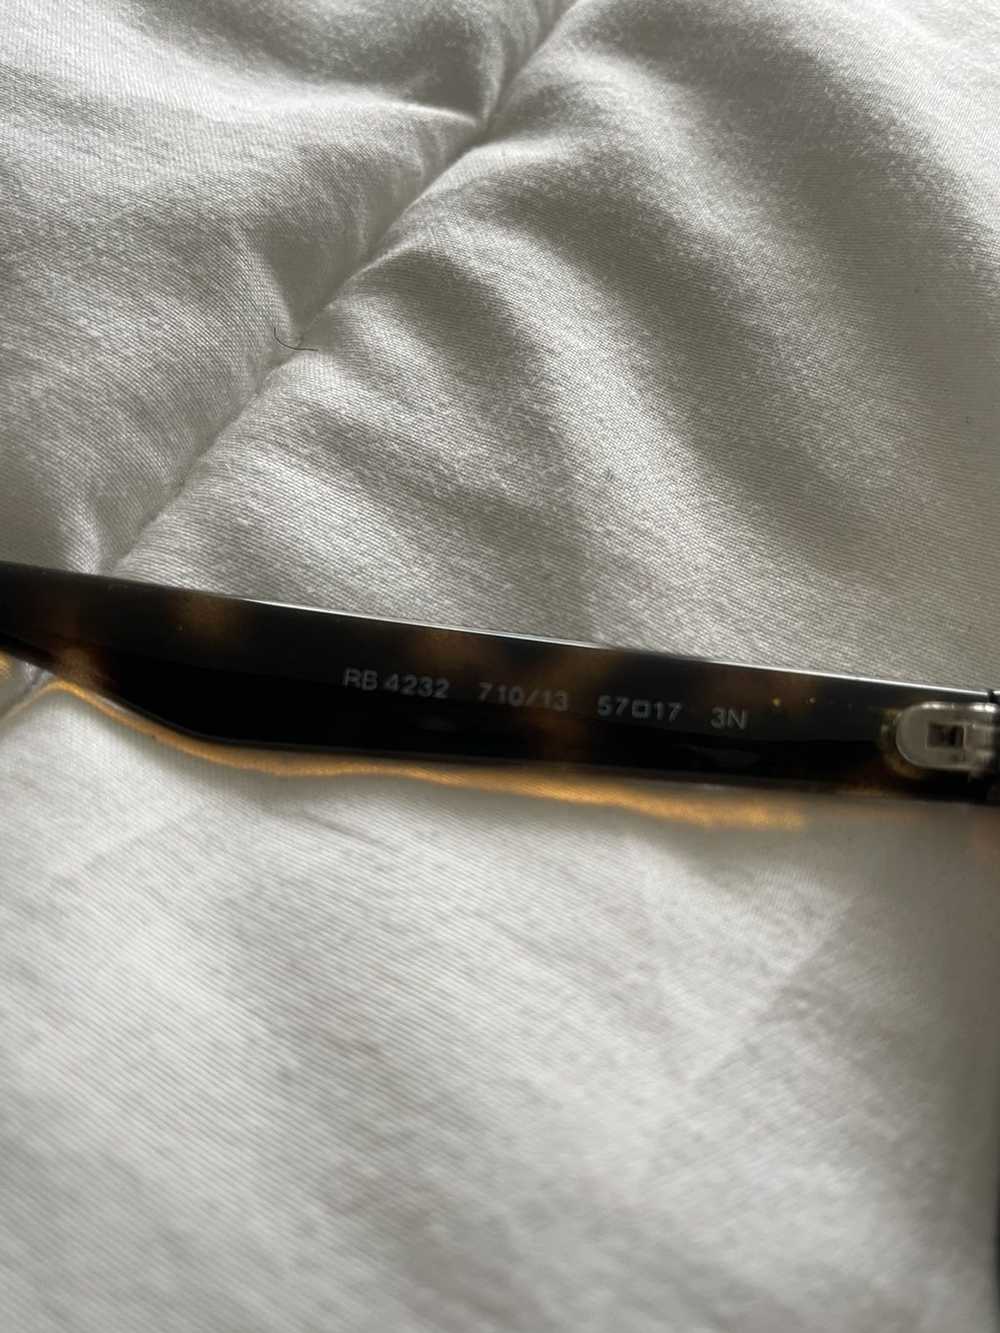 RayBan Ray Ban Gradient Sunglasses RB4232 - image 4